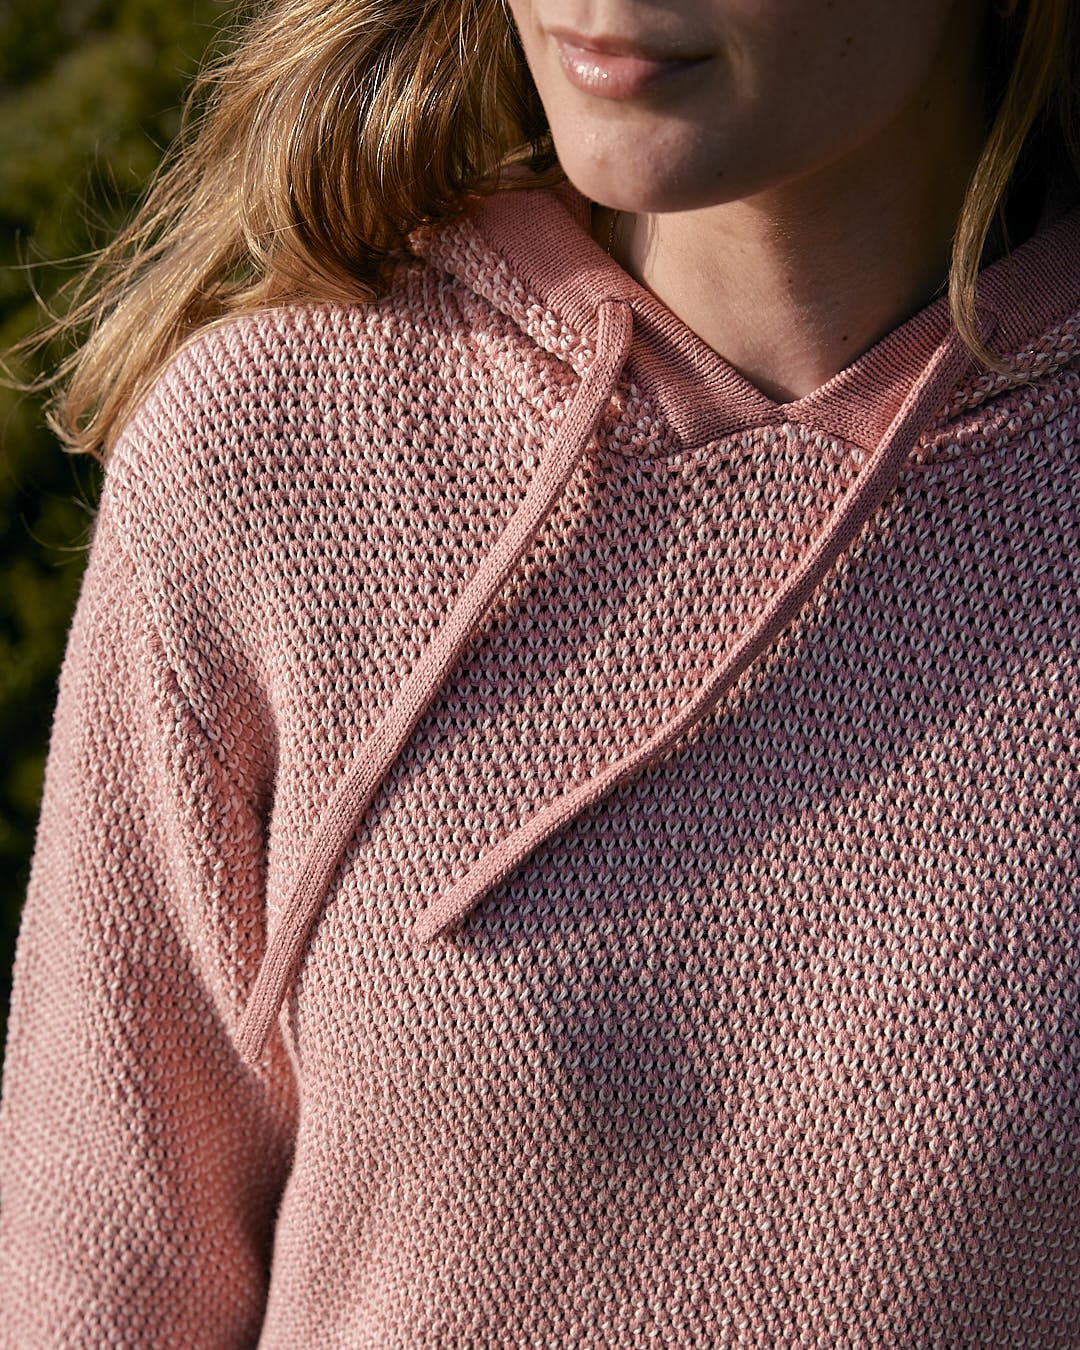 A woman wearing a Saltrock Poppy - Womens Knitted Pop Hoodie - Mid Pink sweater.